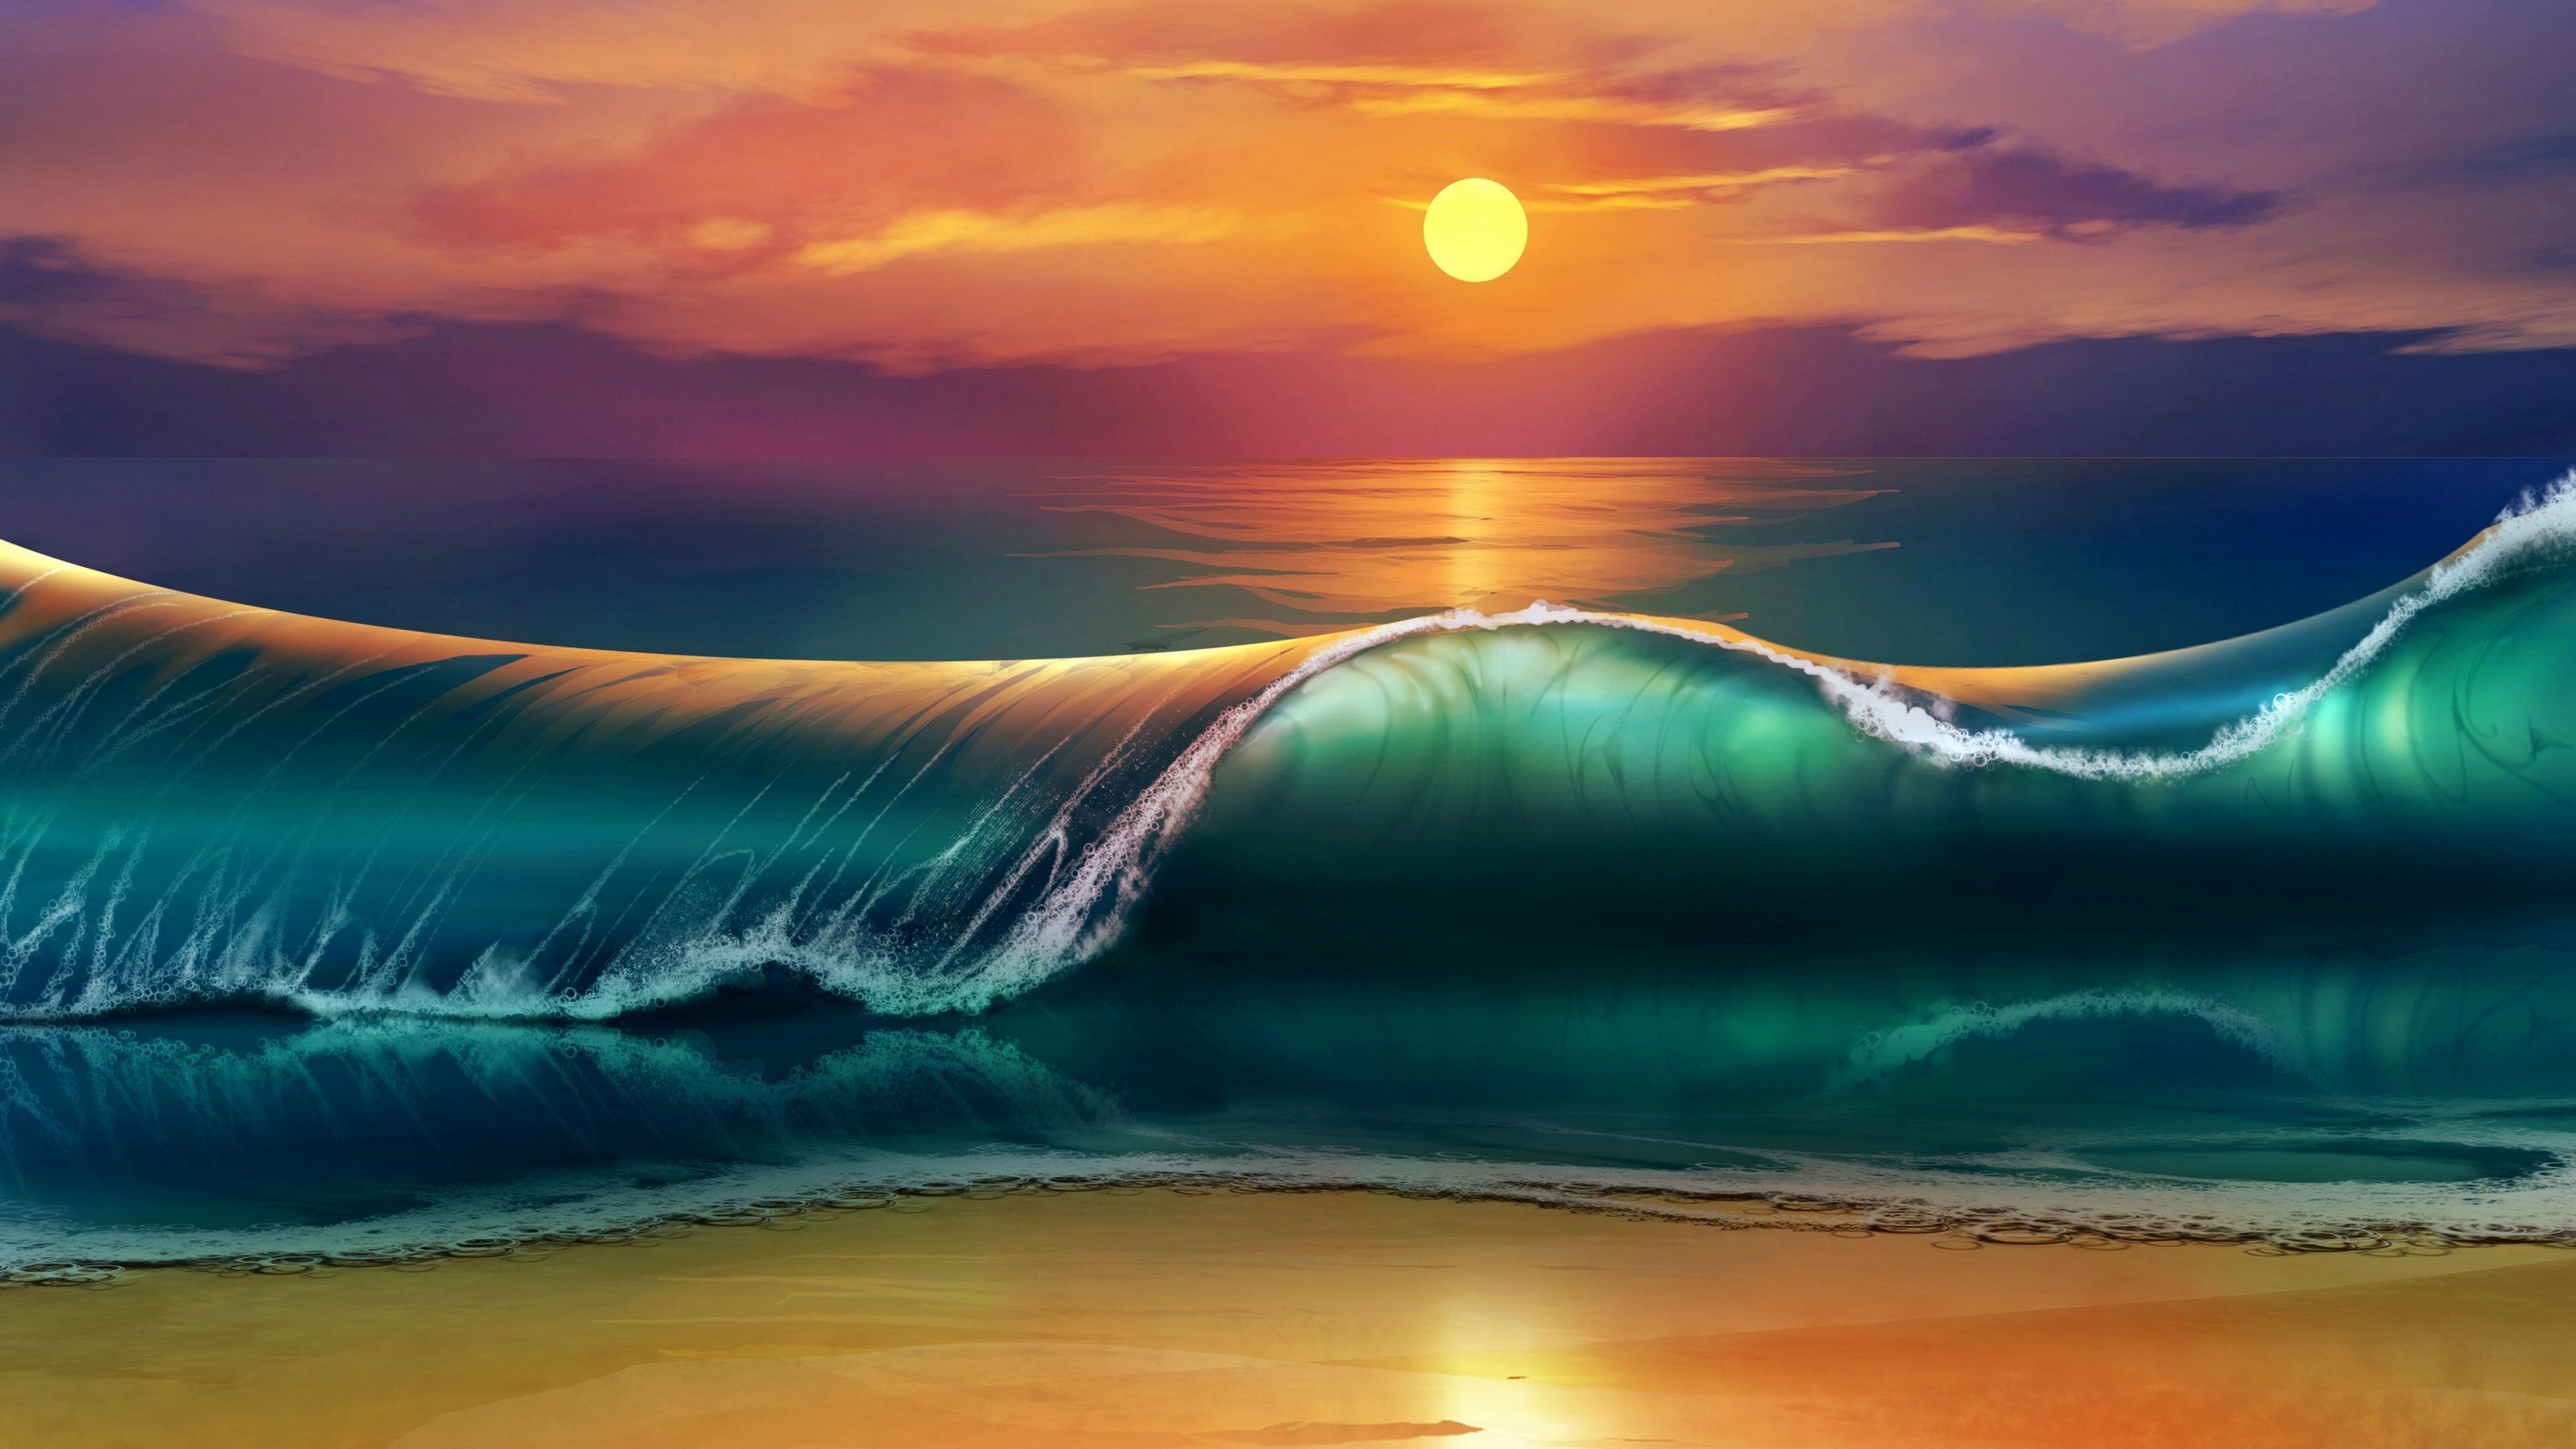 Free download Wallpaper 3840x2160 art sunset beach sea waves 4K